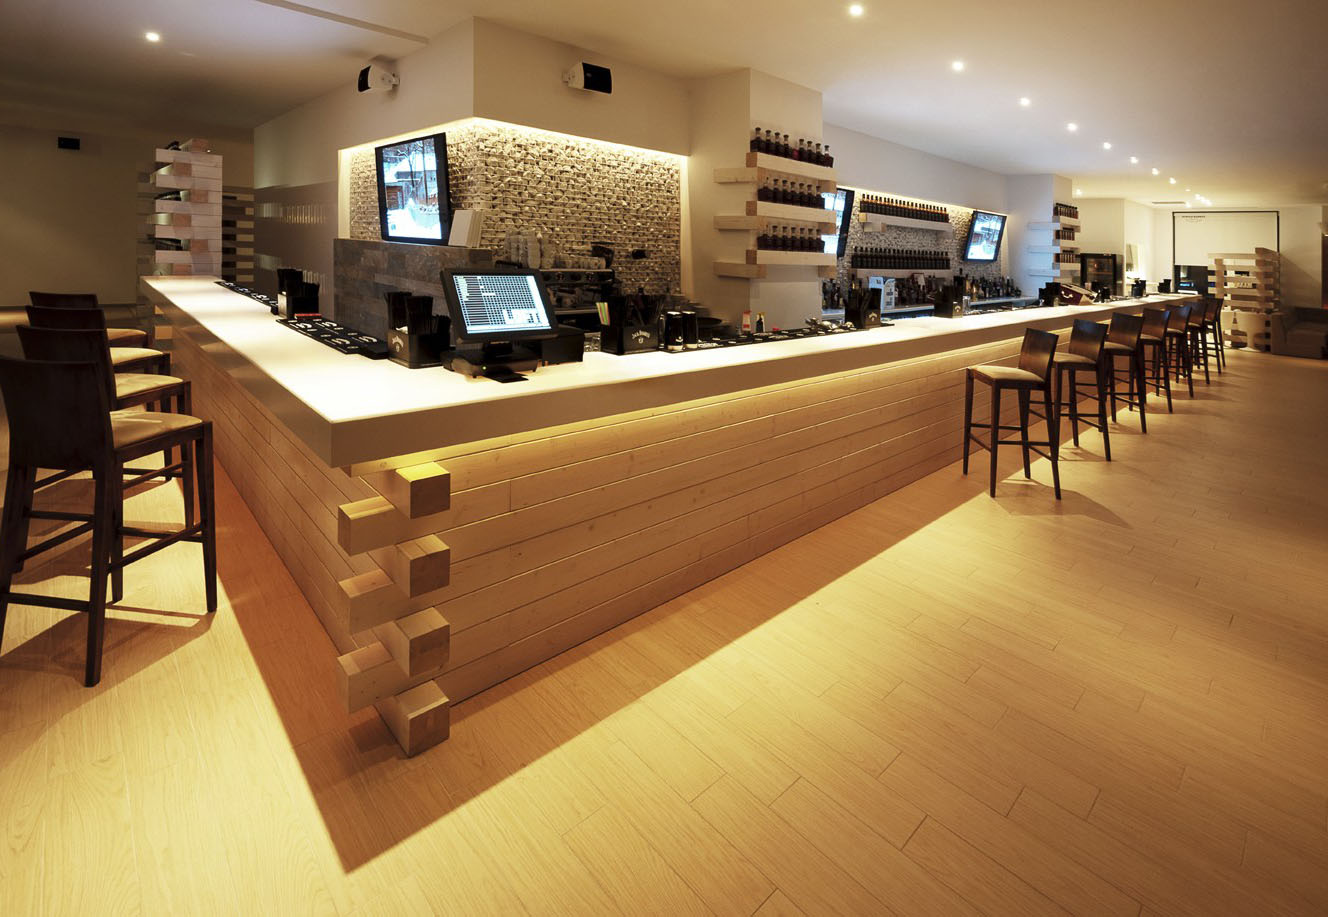 Bar Counter Design For Restaurant - www.inf-inet.com